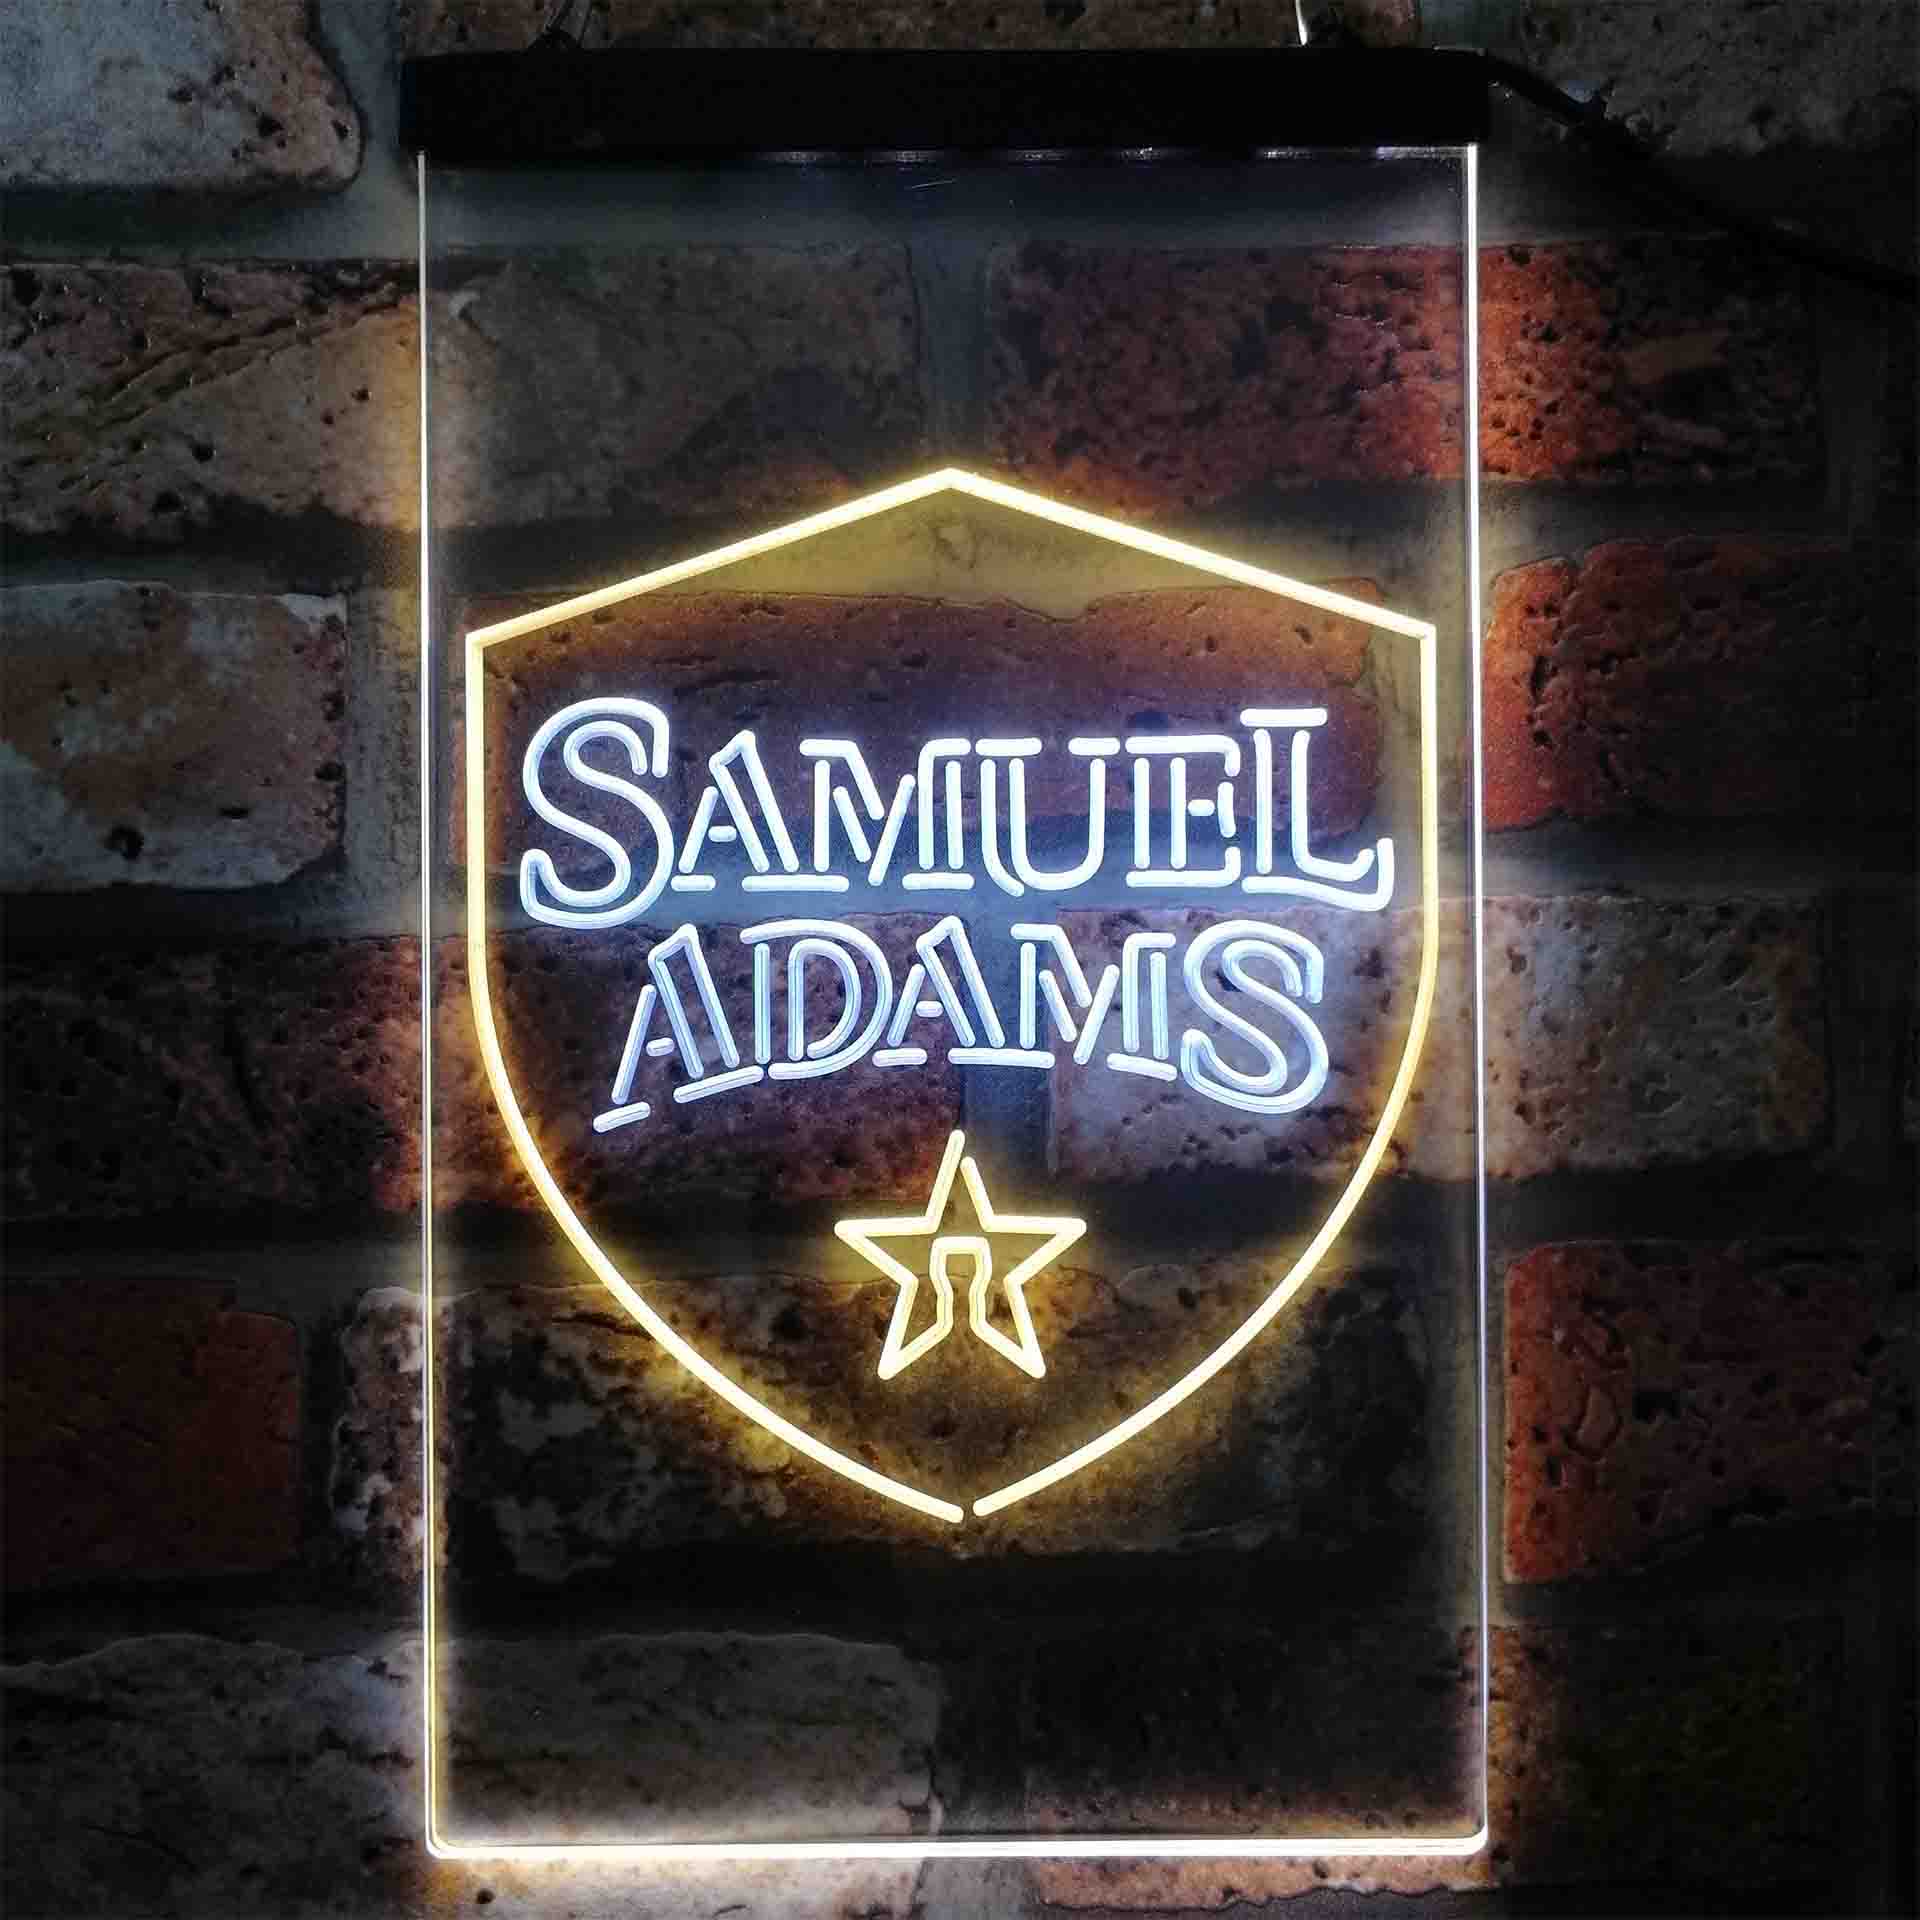 Samuel Adam Badge Neon-Like LED Sign